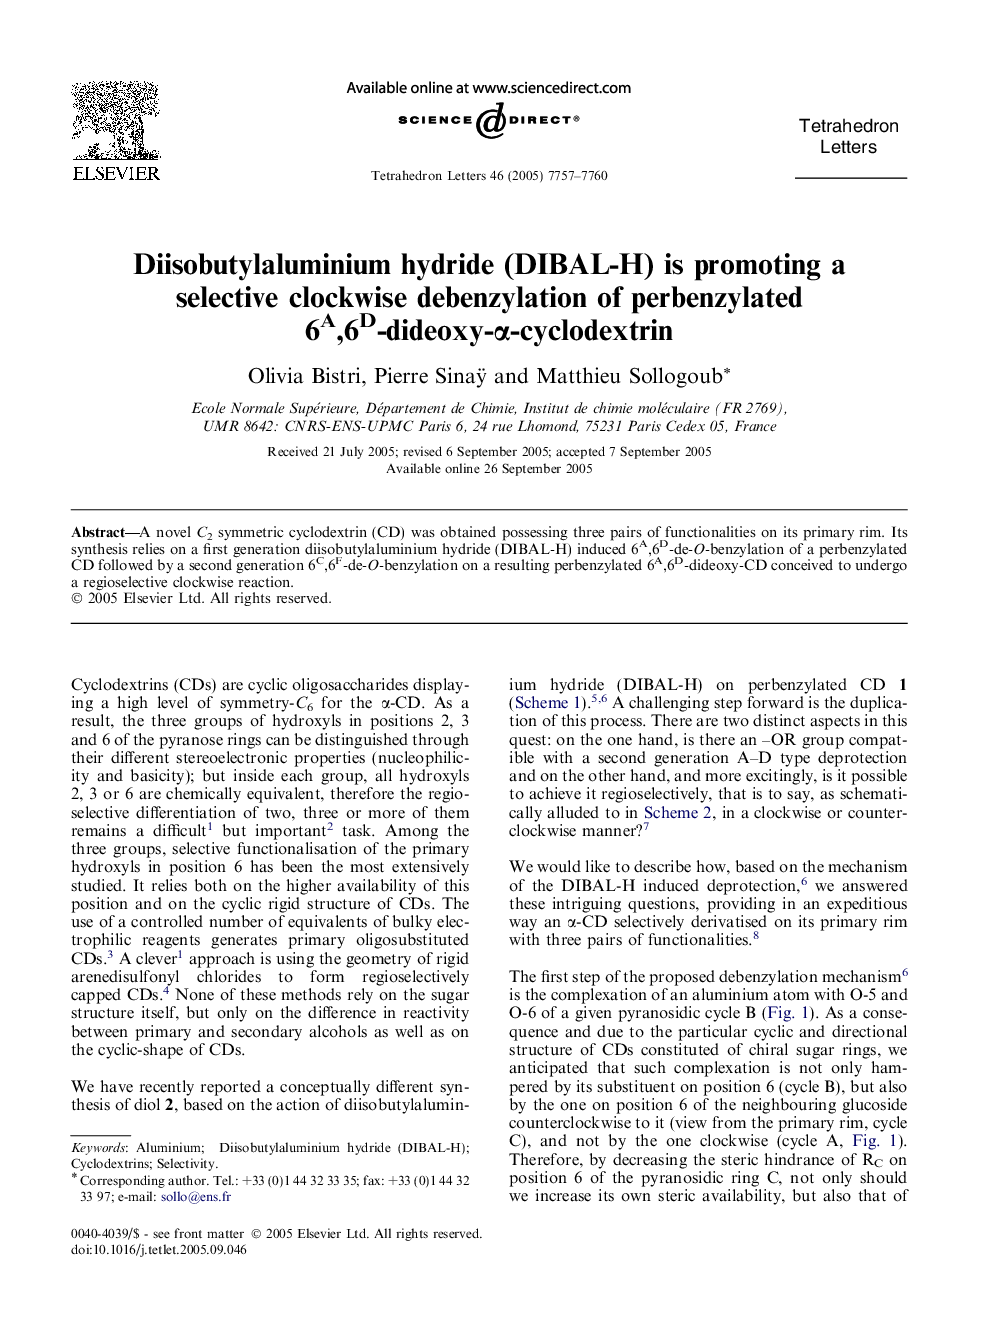 Diisobutylaluminium hydride (DIBAL-H) is promoting a selective clockwise debenzylation of perbenzylated 6A,6D-dideoxy-Î±-cyclodextrin